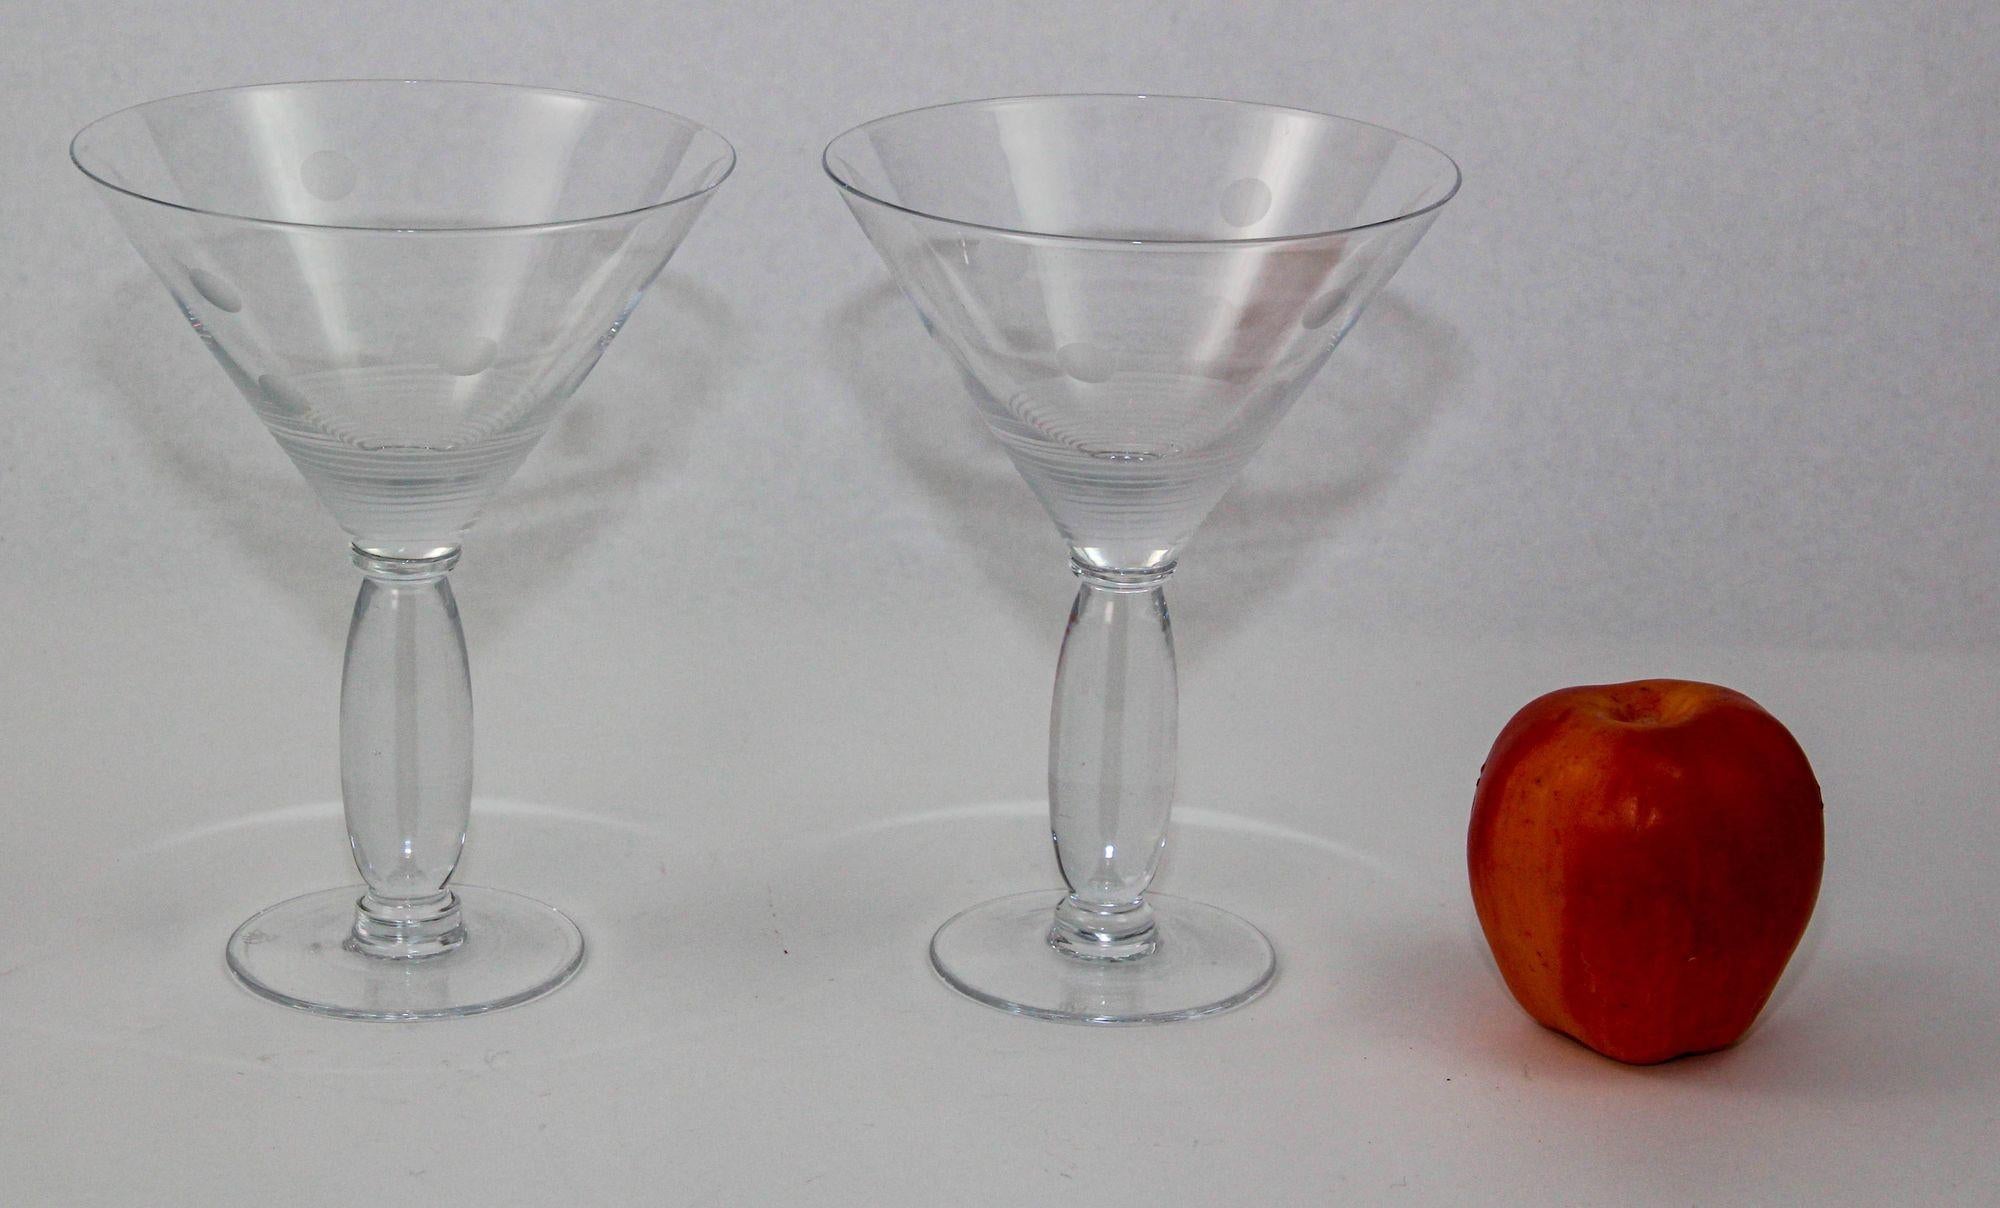 ROYAL DOULTON Martini Crystal Etched Glasses Set of 2 Vintage Cocktail Barware For Sale 2